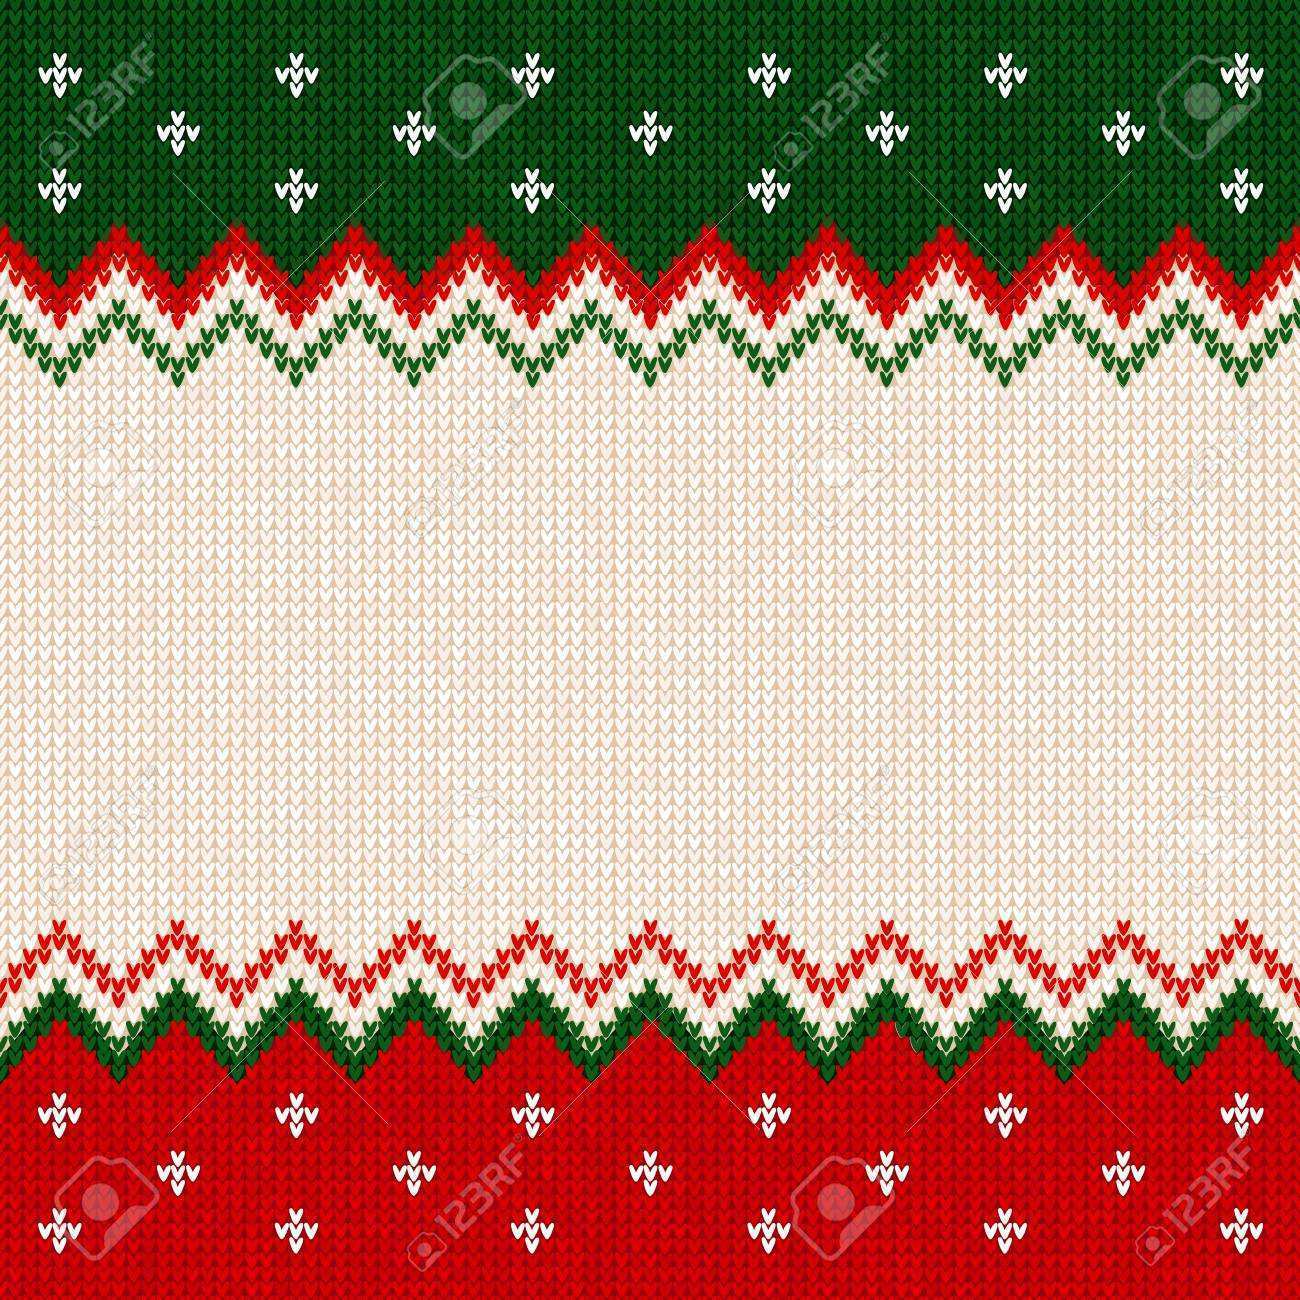 60 Creative Christmas Card Border Templates Formating by Christmas Card Border Templates